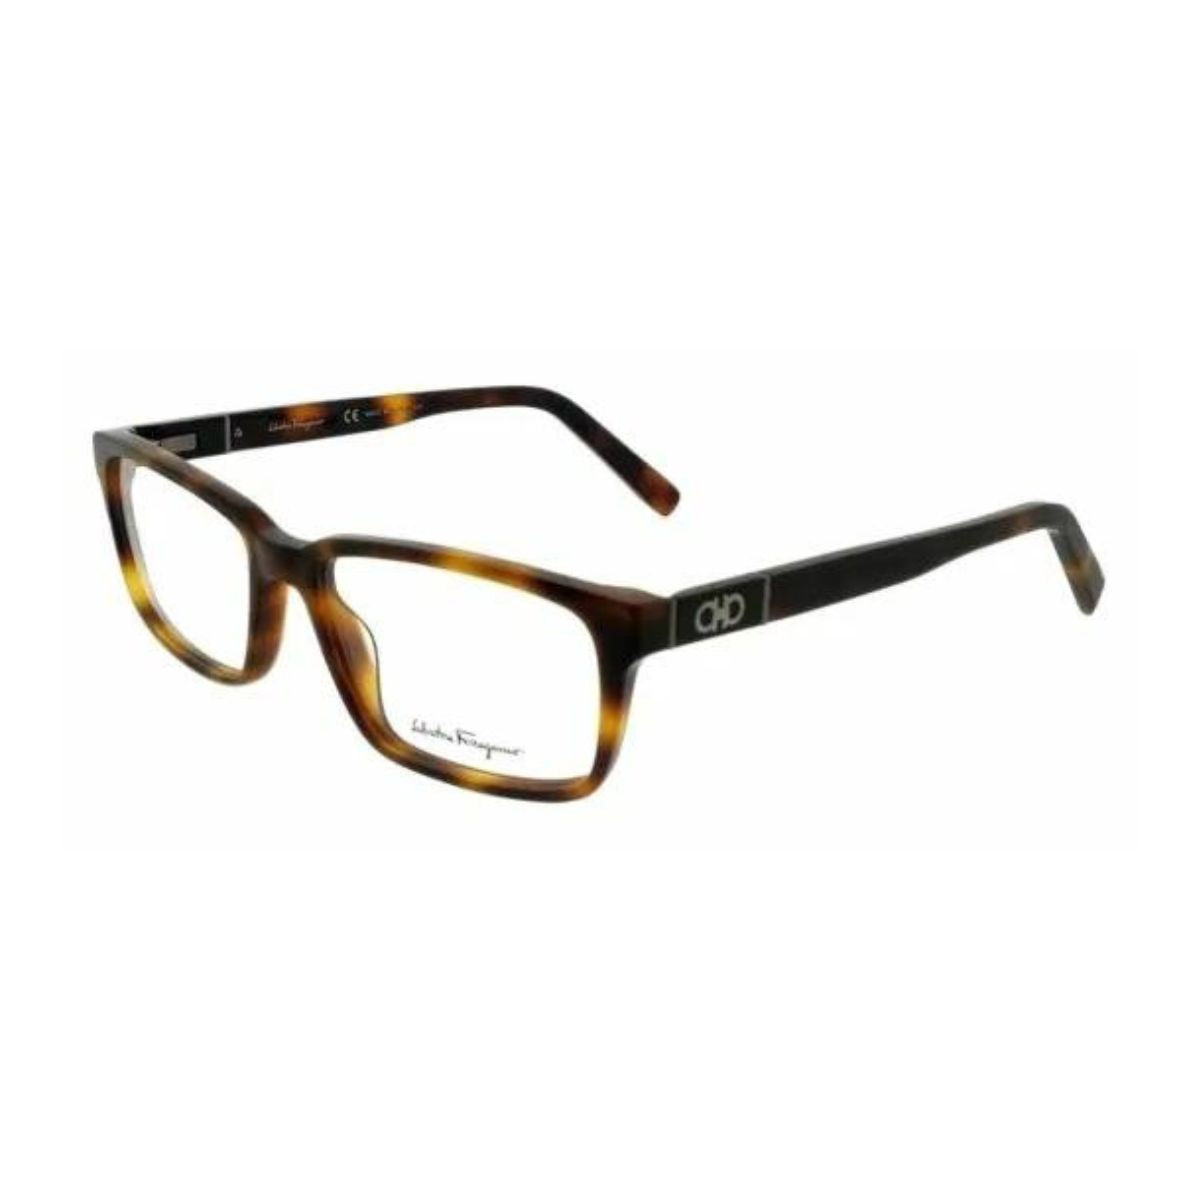 "Salvatore Ferragamo SF2772 214 optical eyewear frame for men's online at optorium"